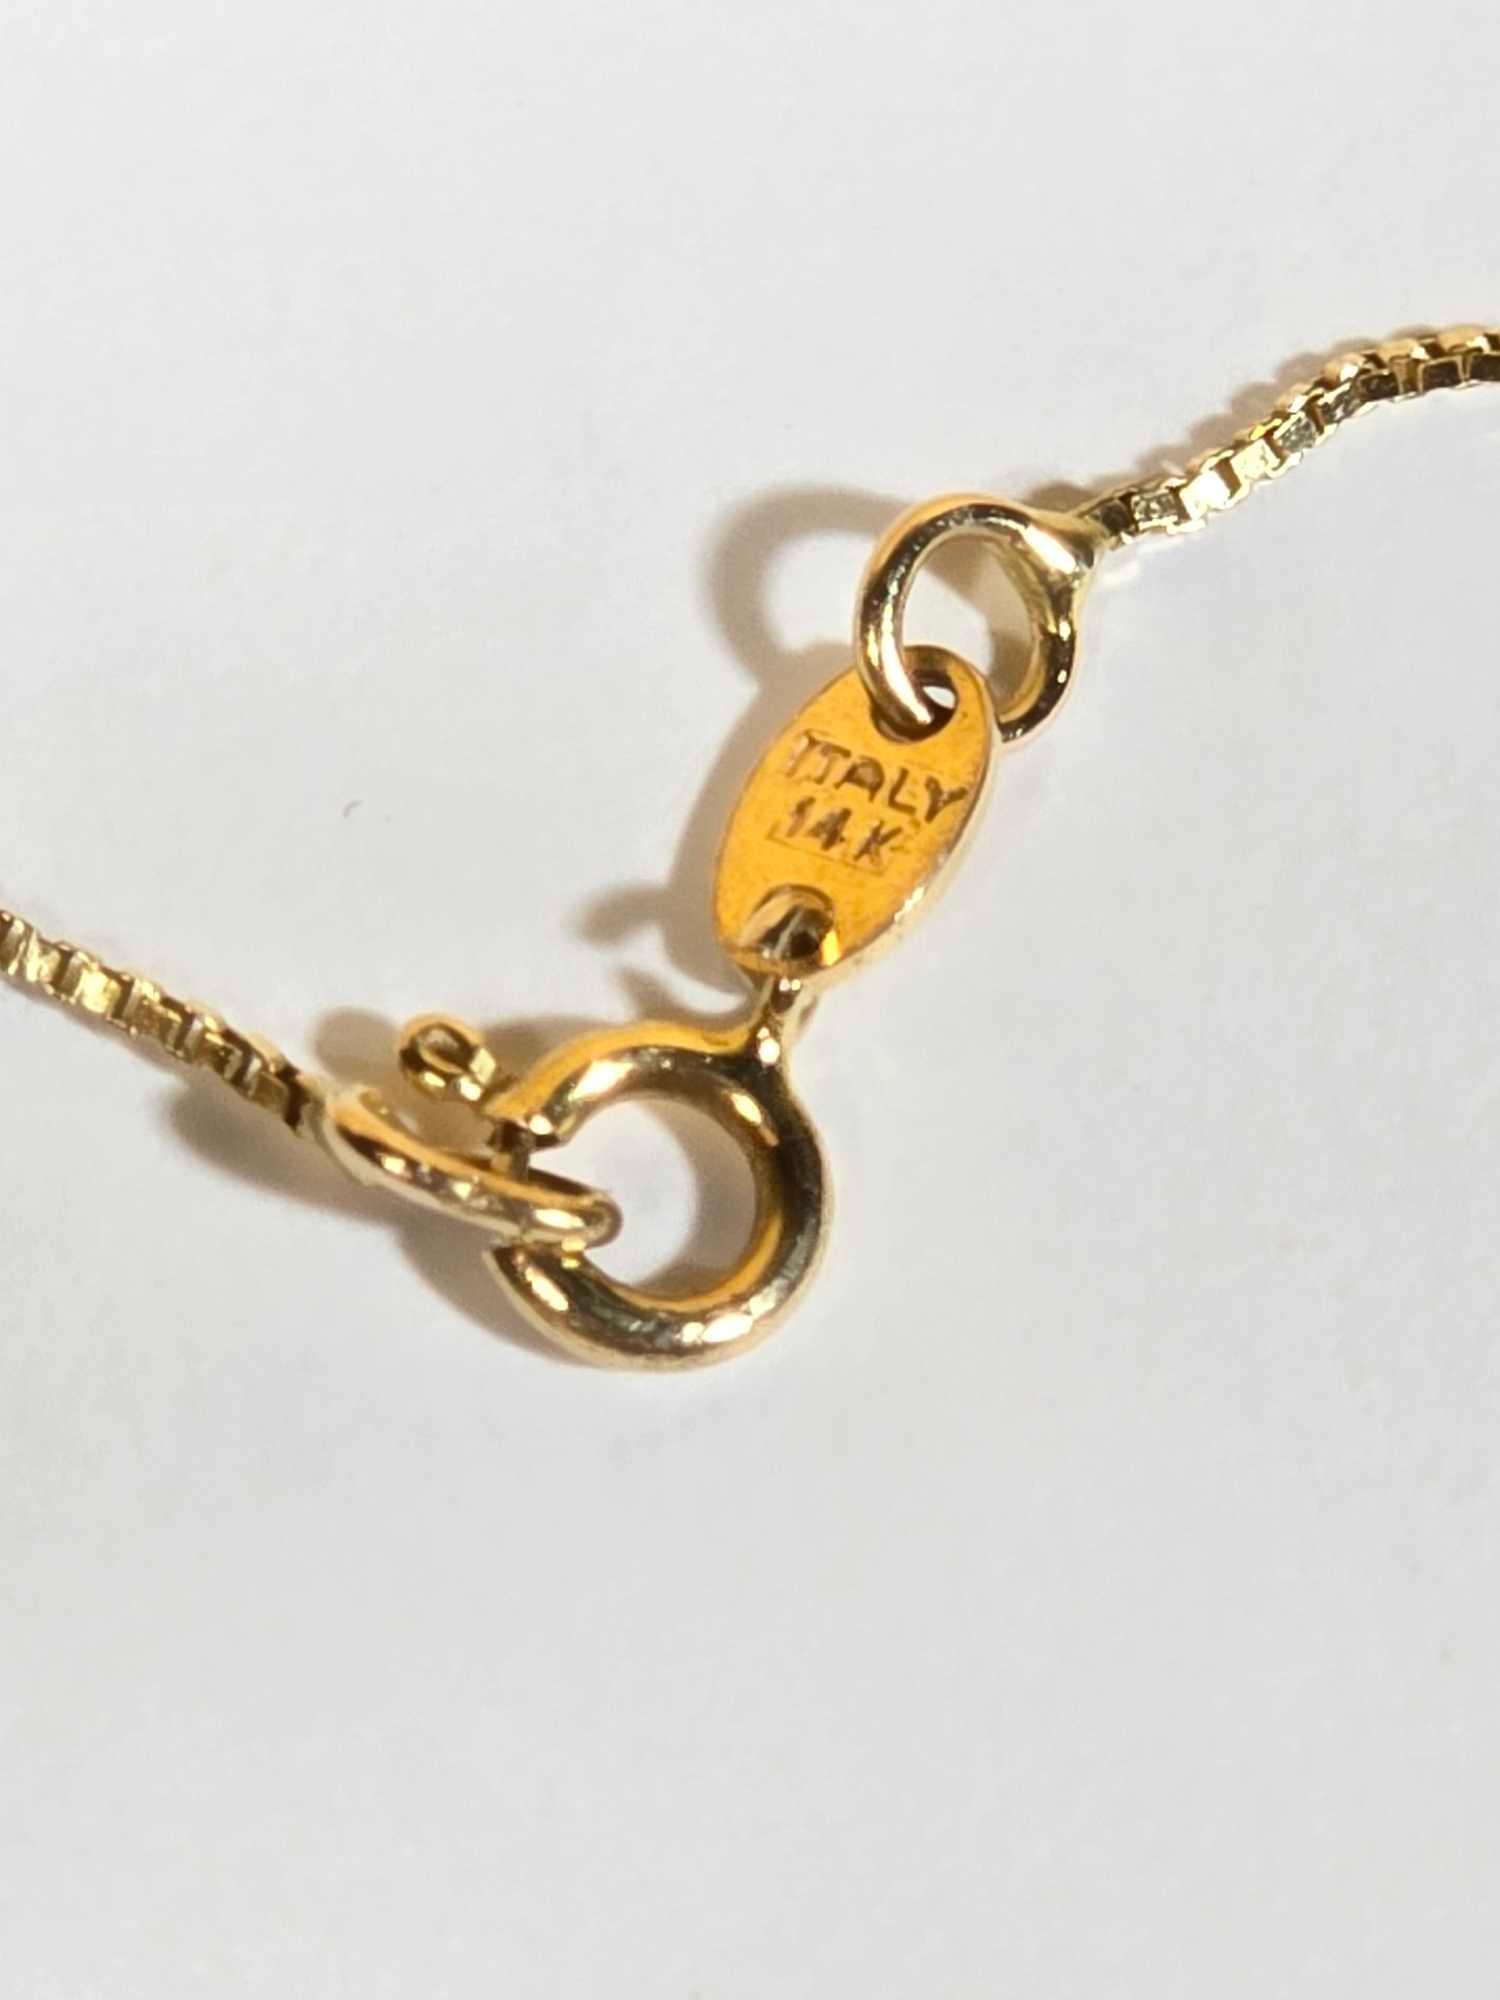 14k Gold Diamond Pendant Necklace